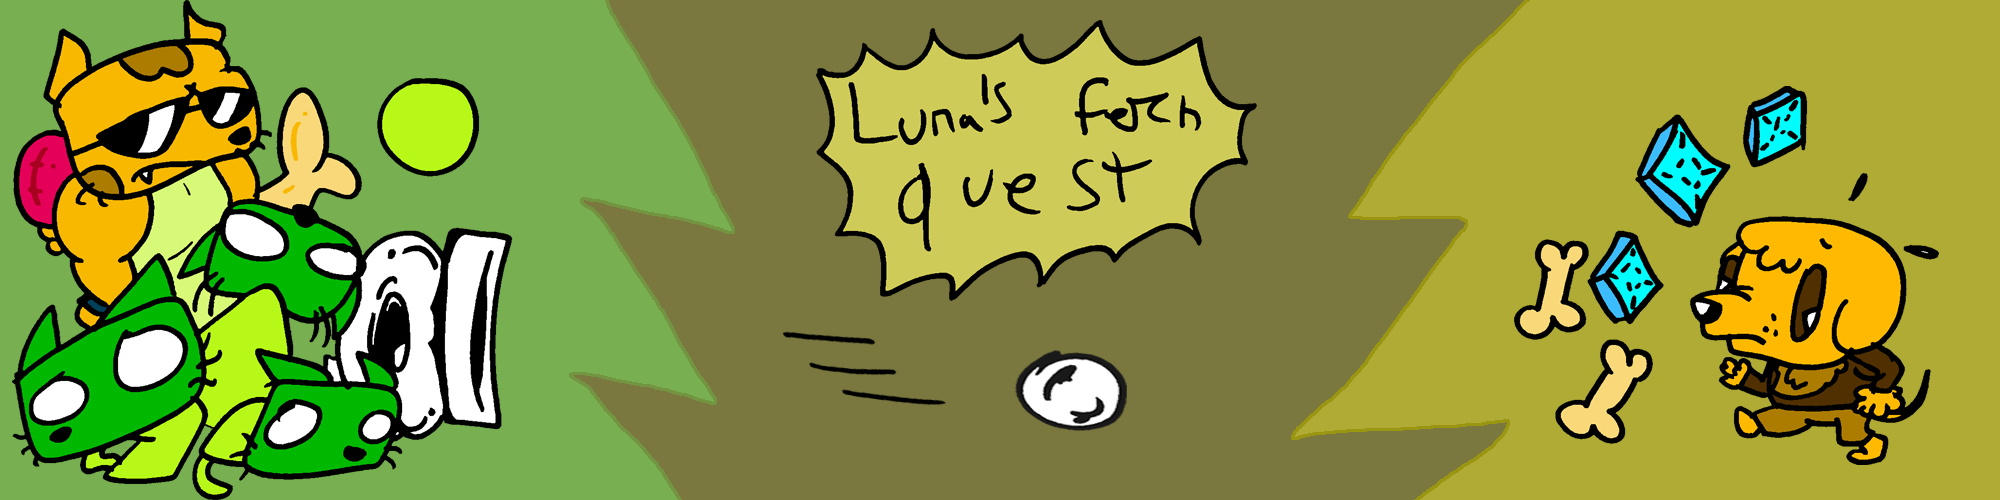 Luna's Fetch Quest